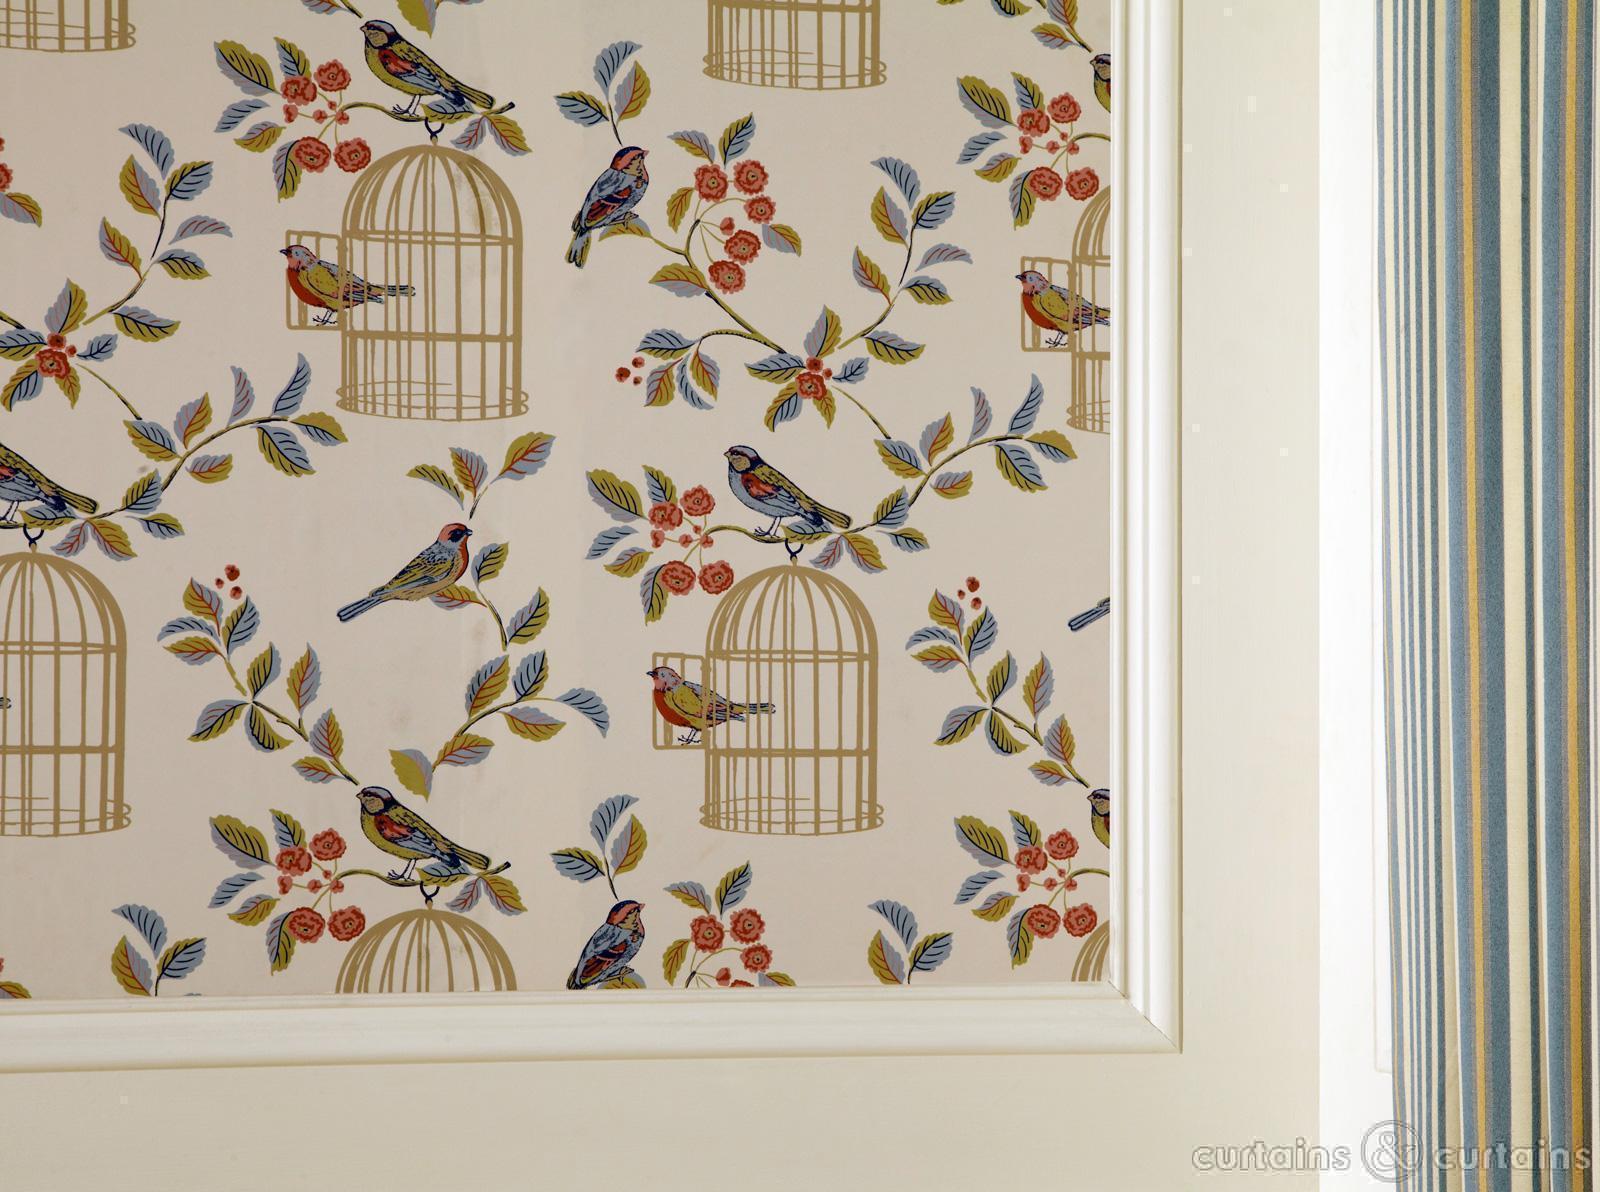 vintage bird desktop wallpaper